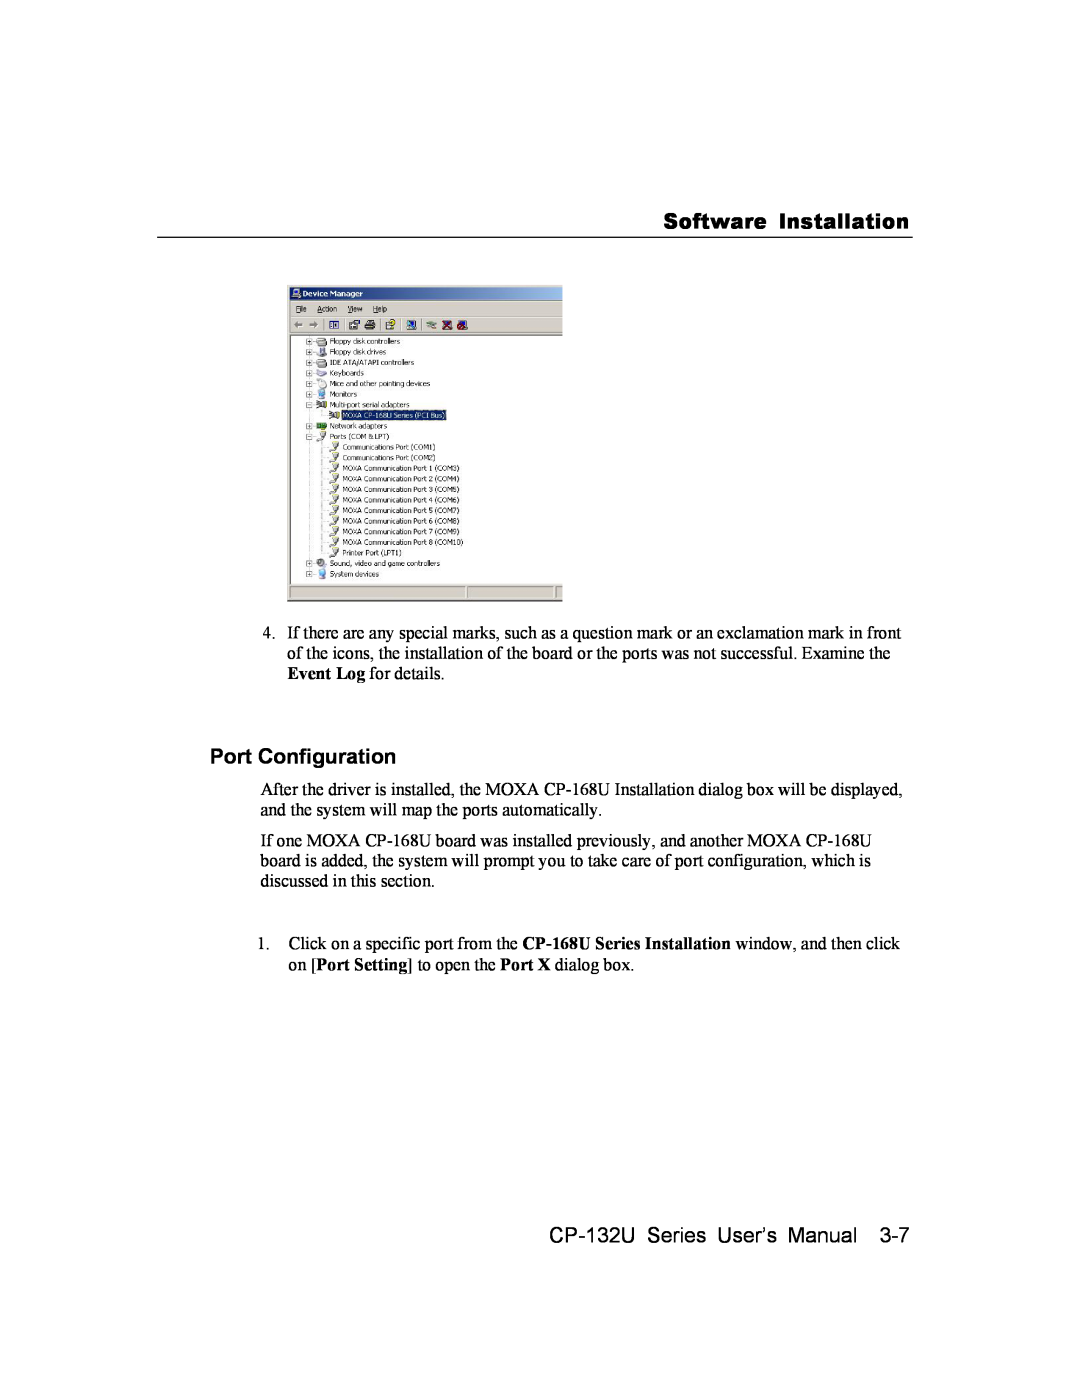 Moxa Technologies user manual Port Configuration, Software Installation, CP-132U Series User’s Manual 